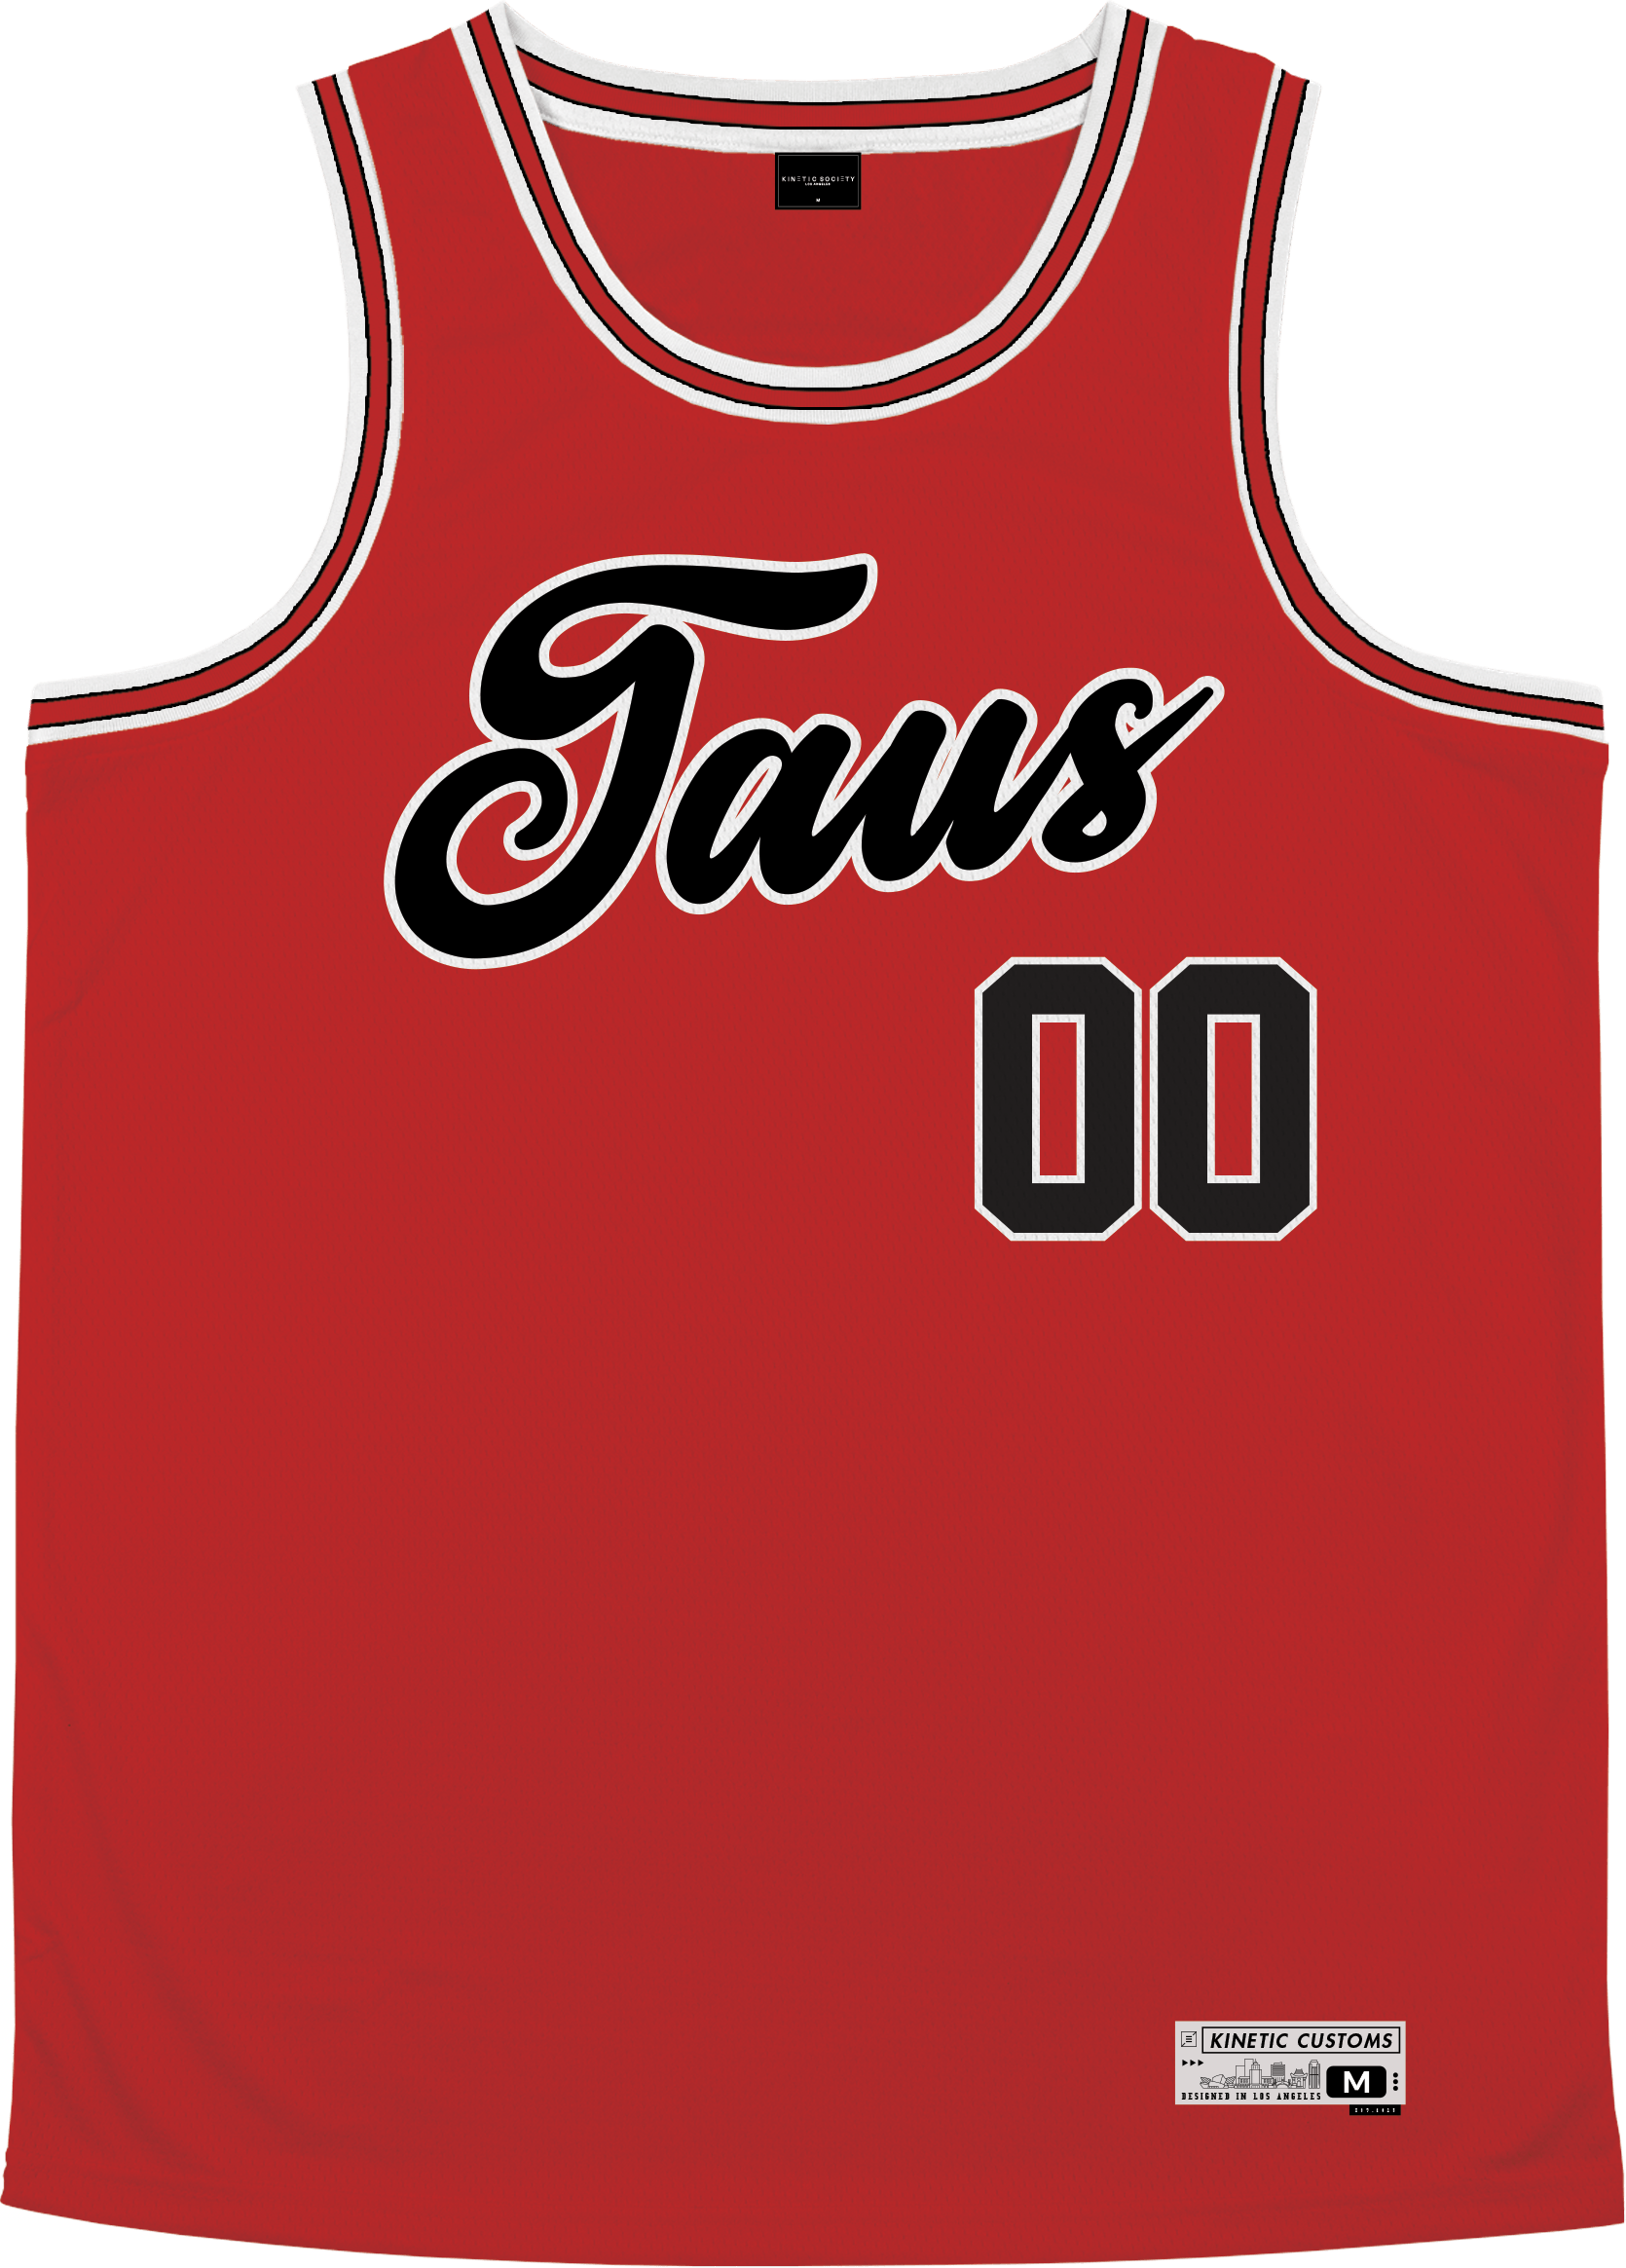 Alpha Tau Omega - Big Red Basketball Jersey - Kinetic Society